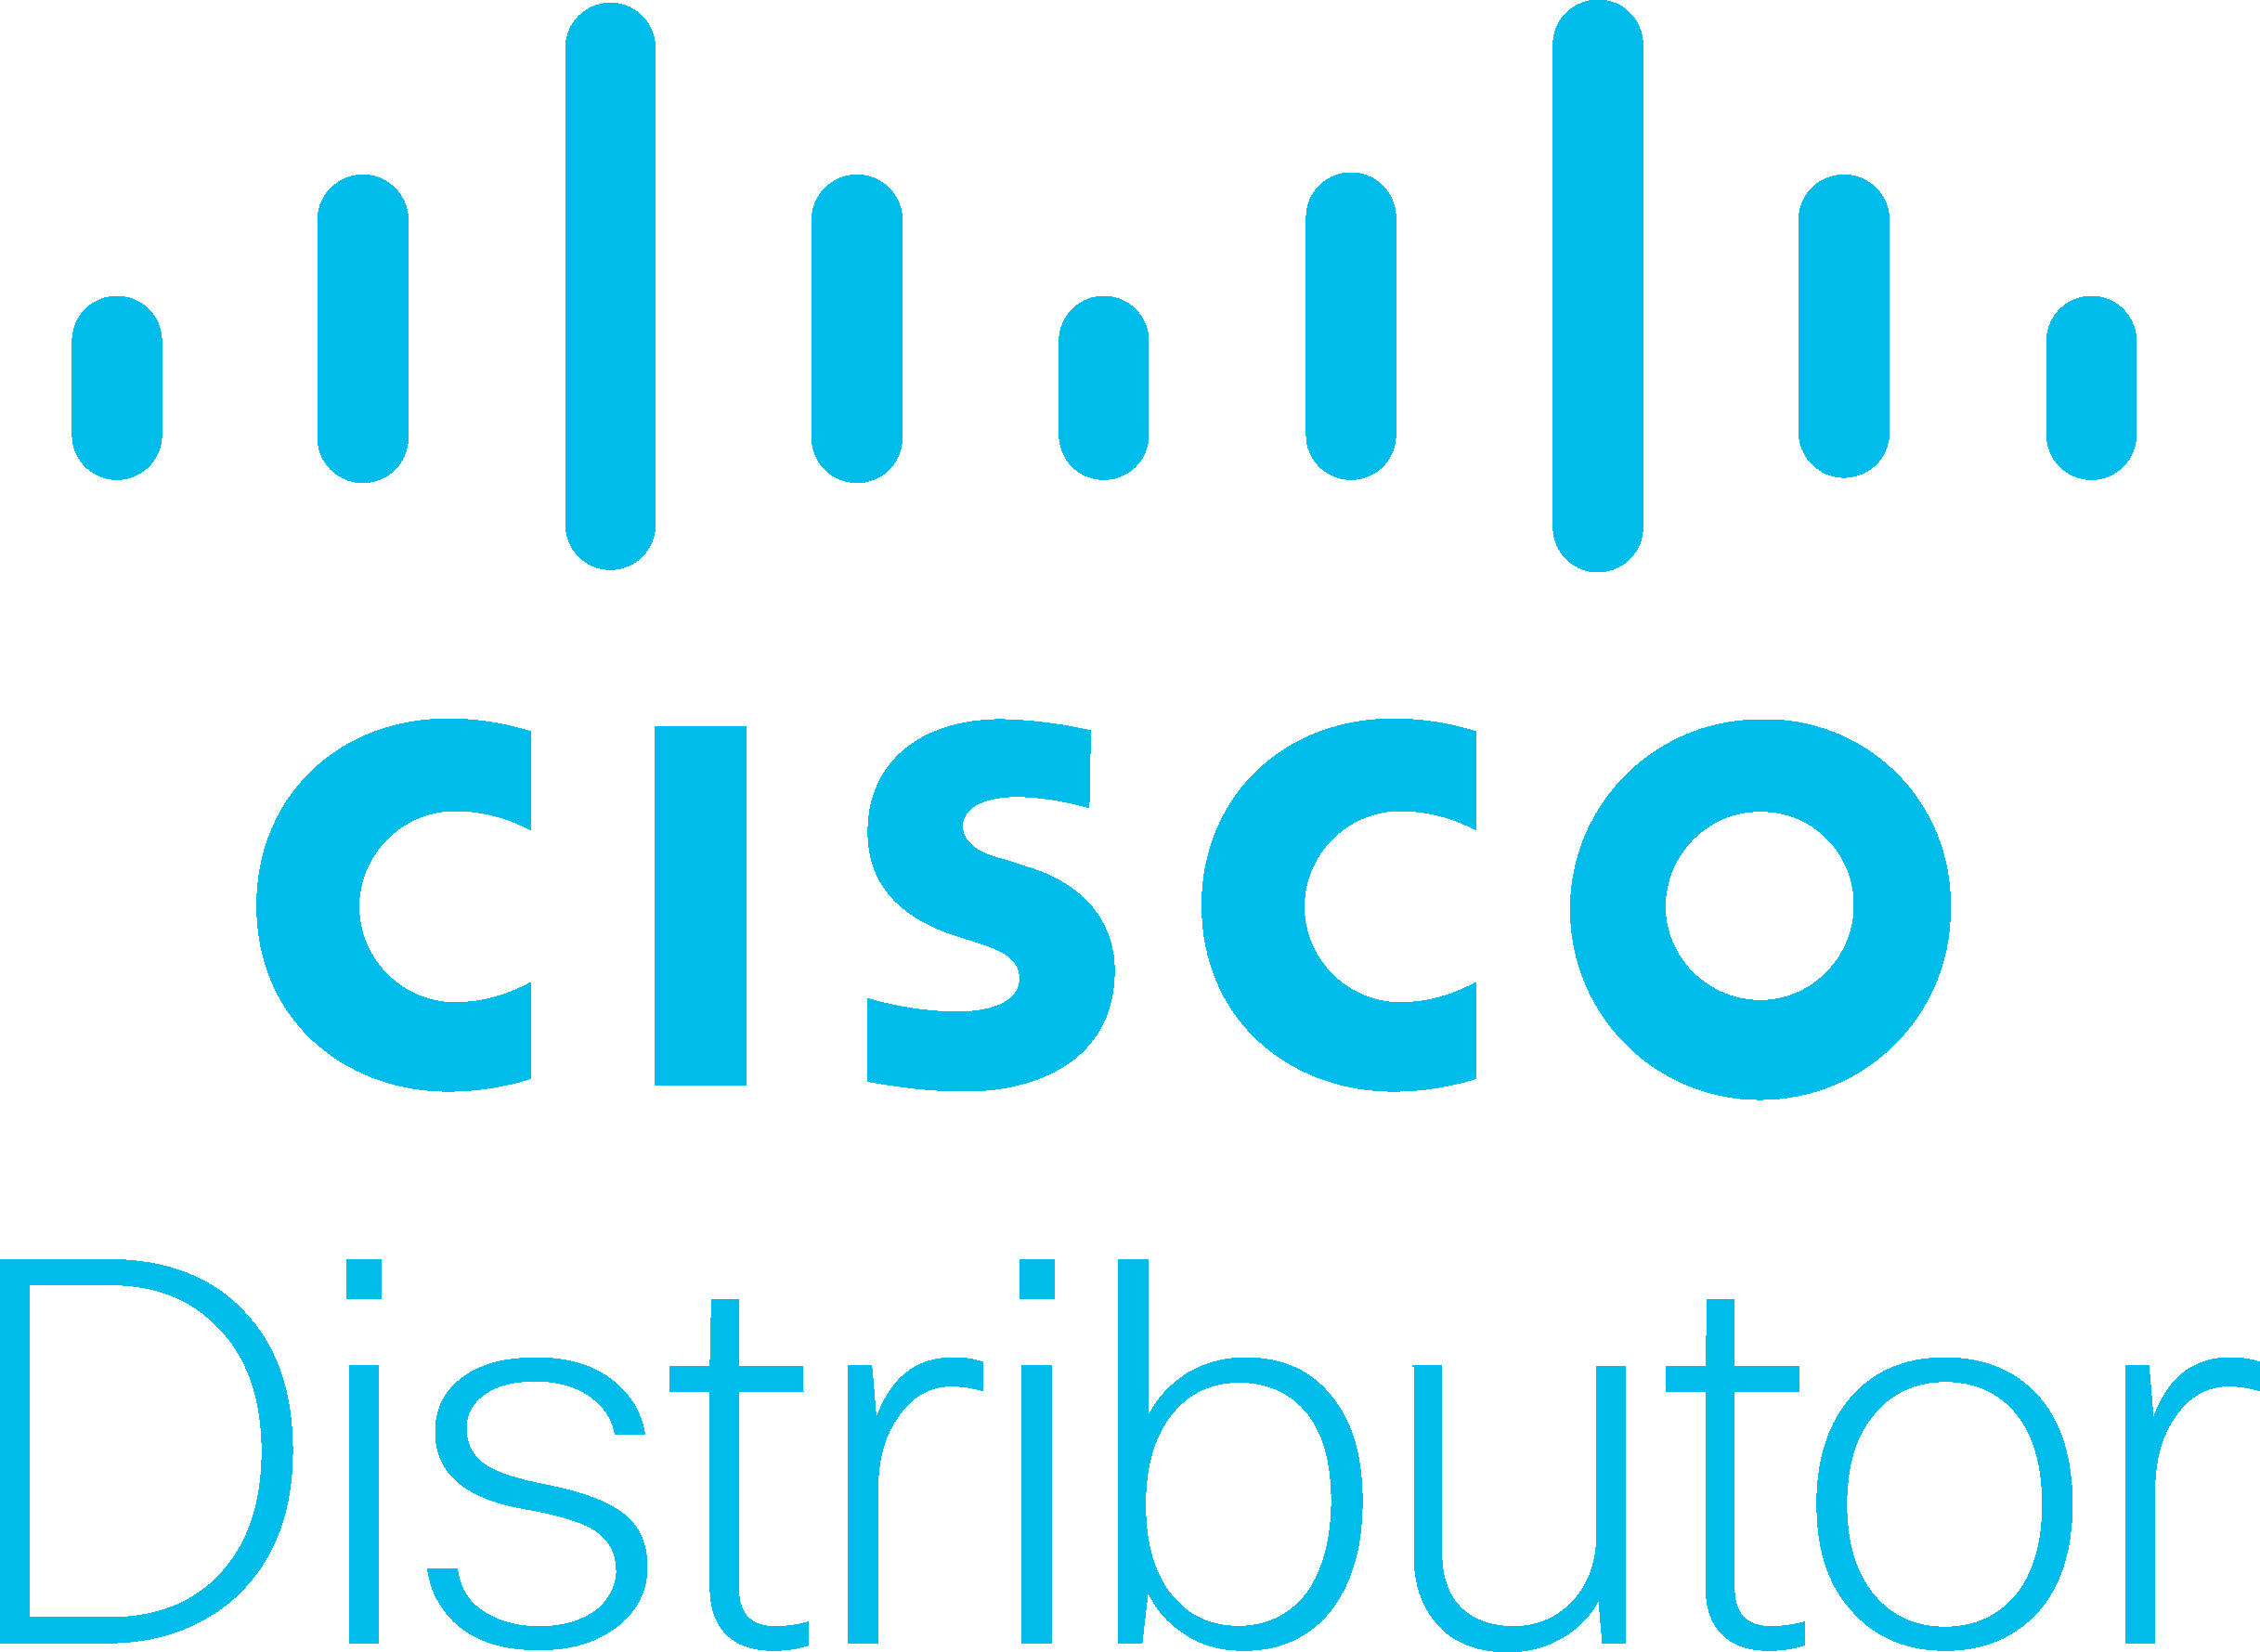 Cisco Distributor logo in blue